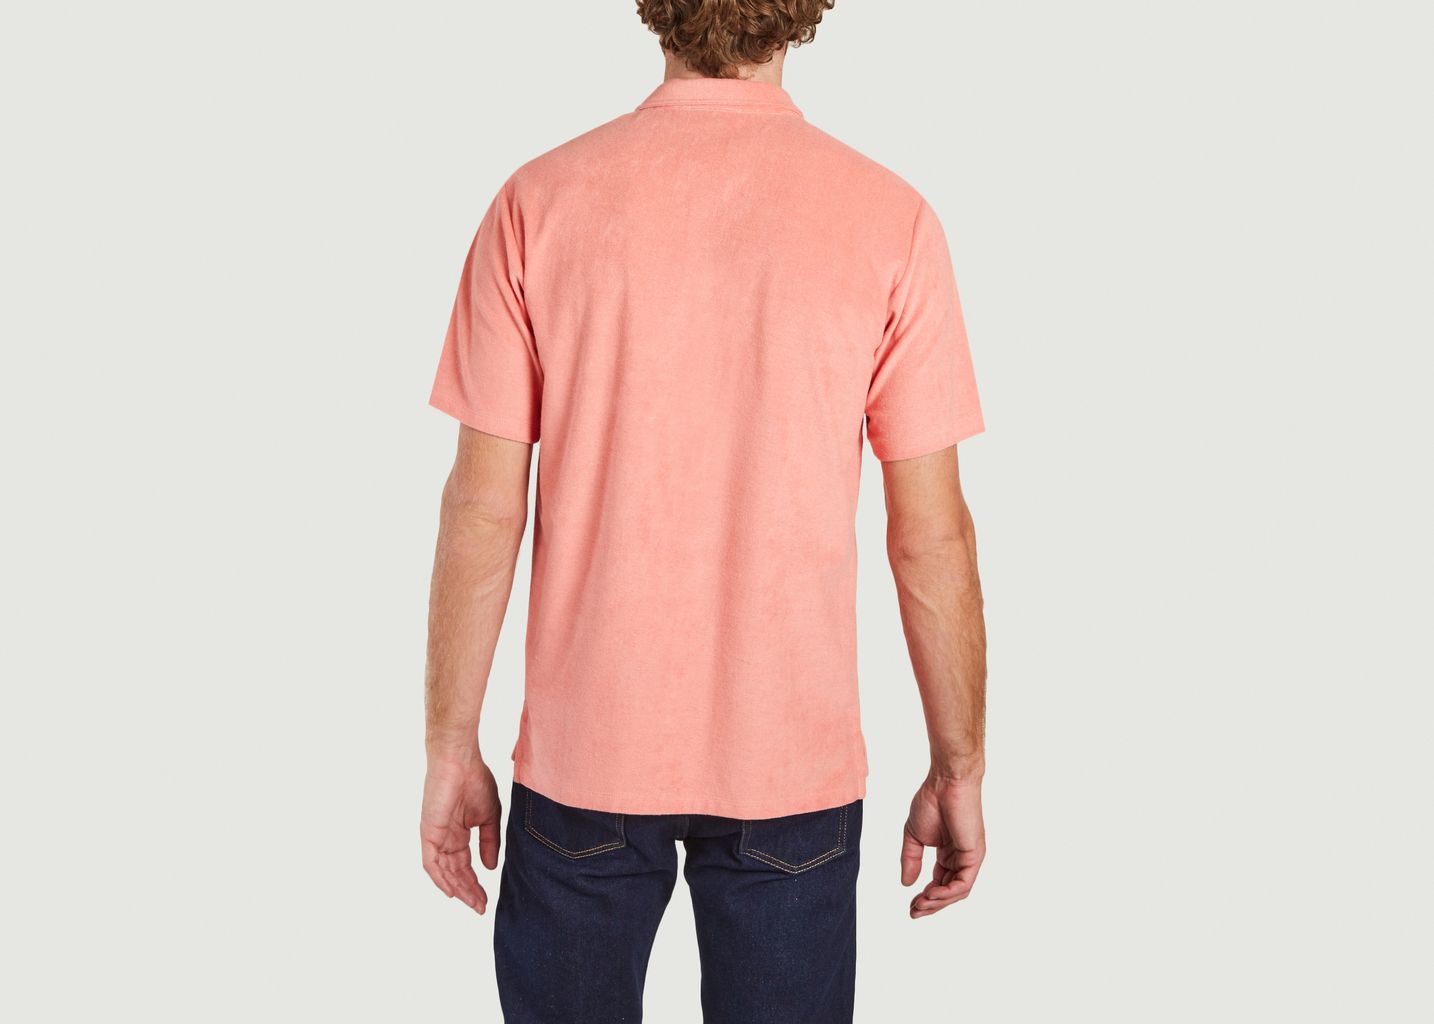 Terry Salmon Polo T-Shirt in cotton and modal - Edmmond Studios